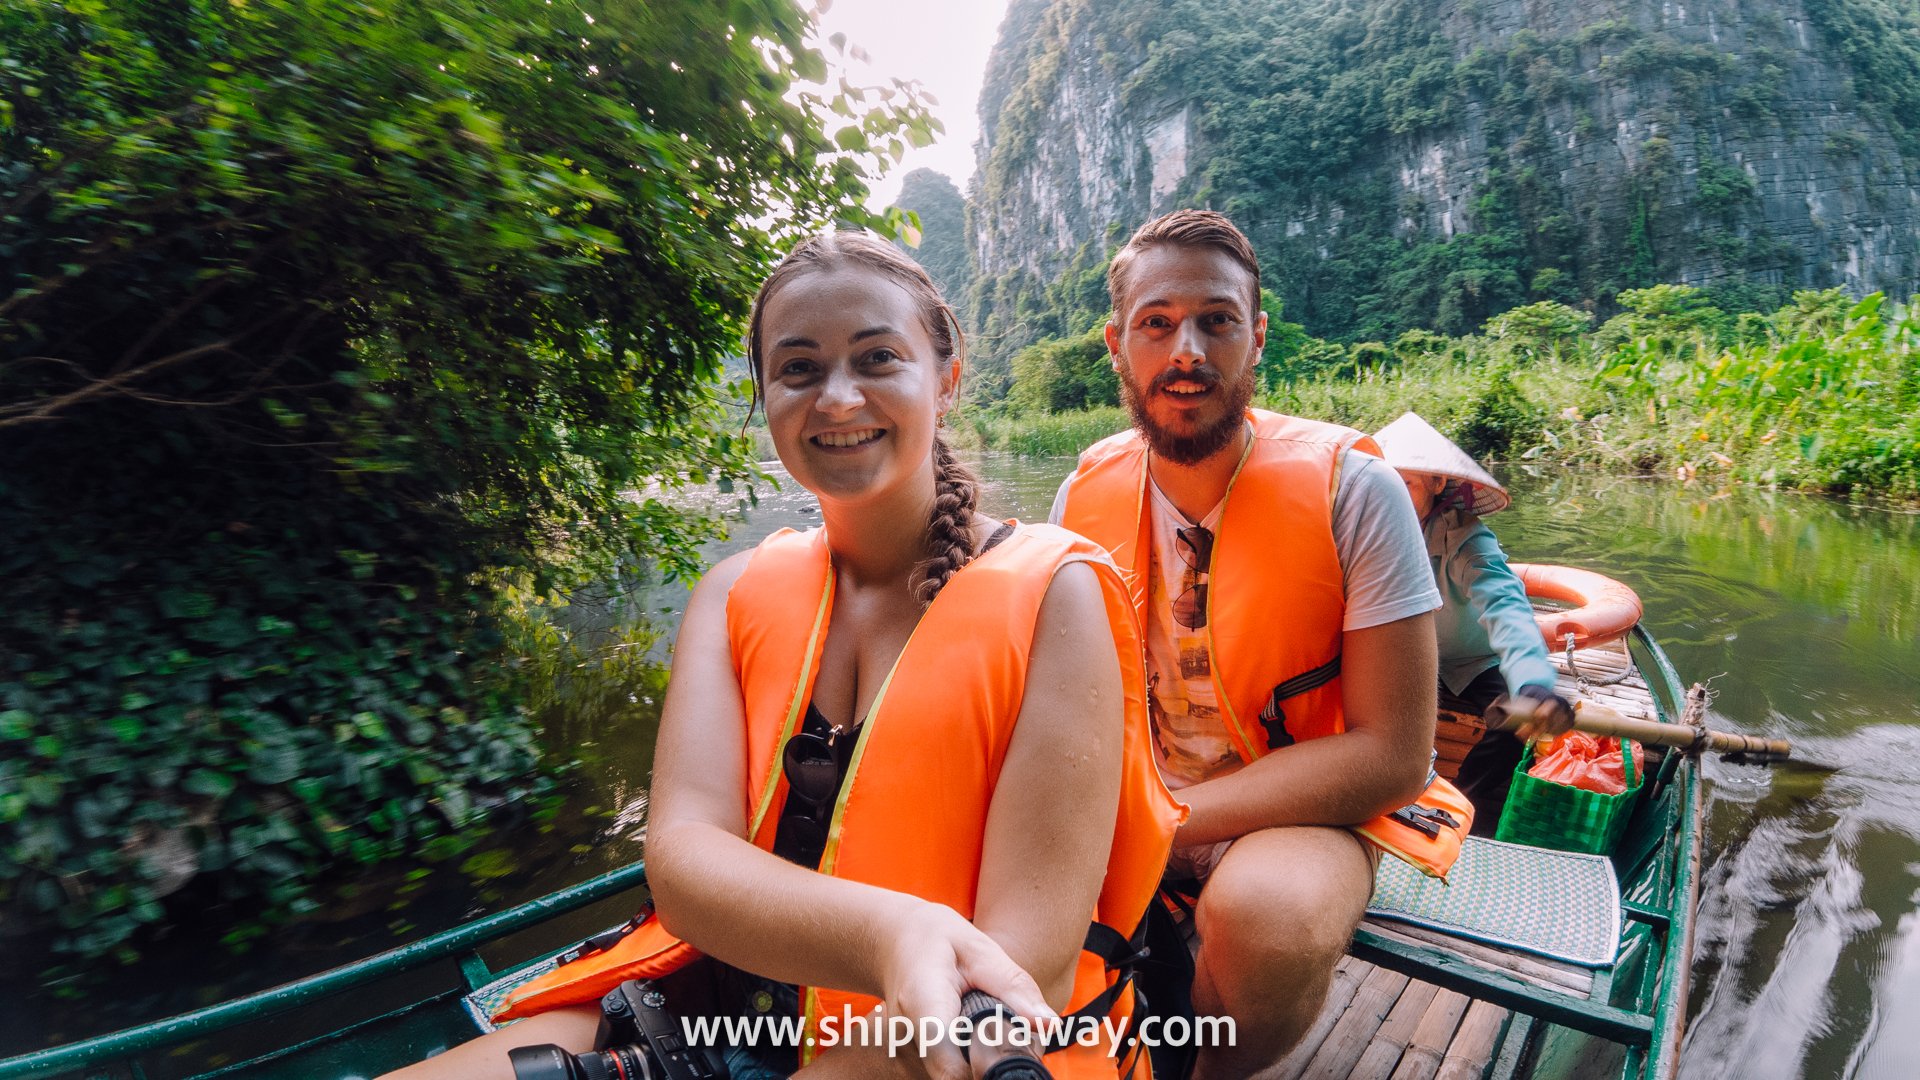 Arijana and Matej on the Trang An boat ride in Ninh Binh, Vietnam